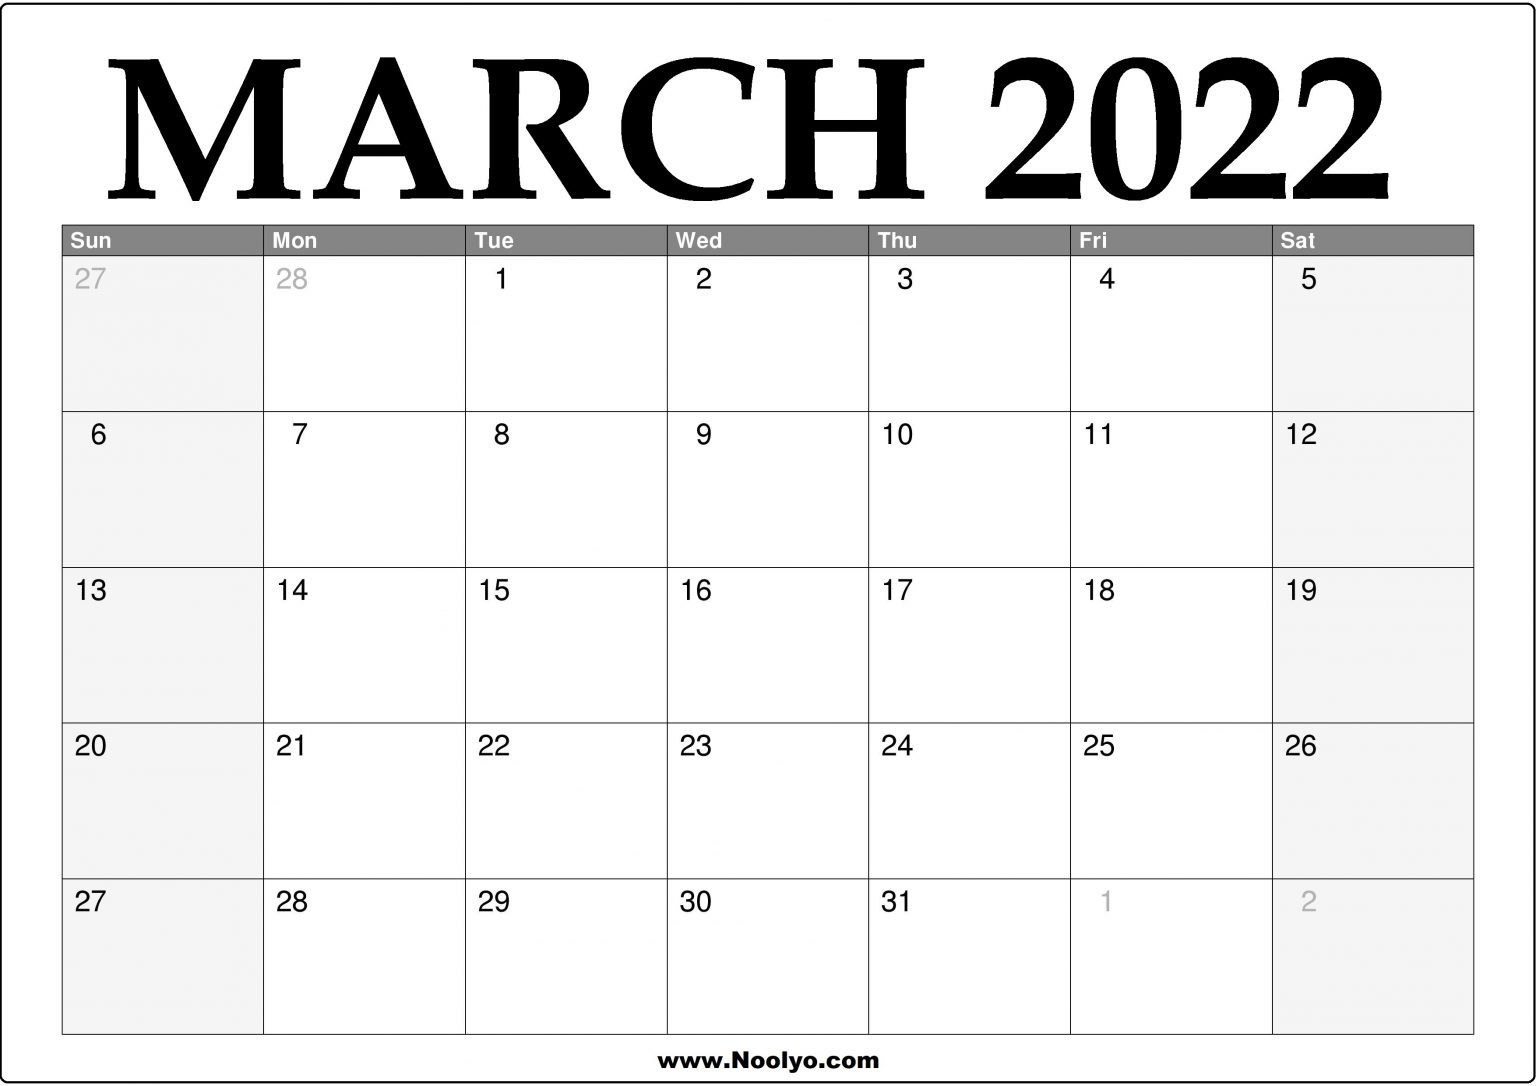 2022 March Calendar Printable - Download Free - Noolyo  March April 2022 Calendar